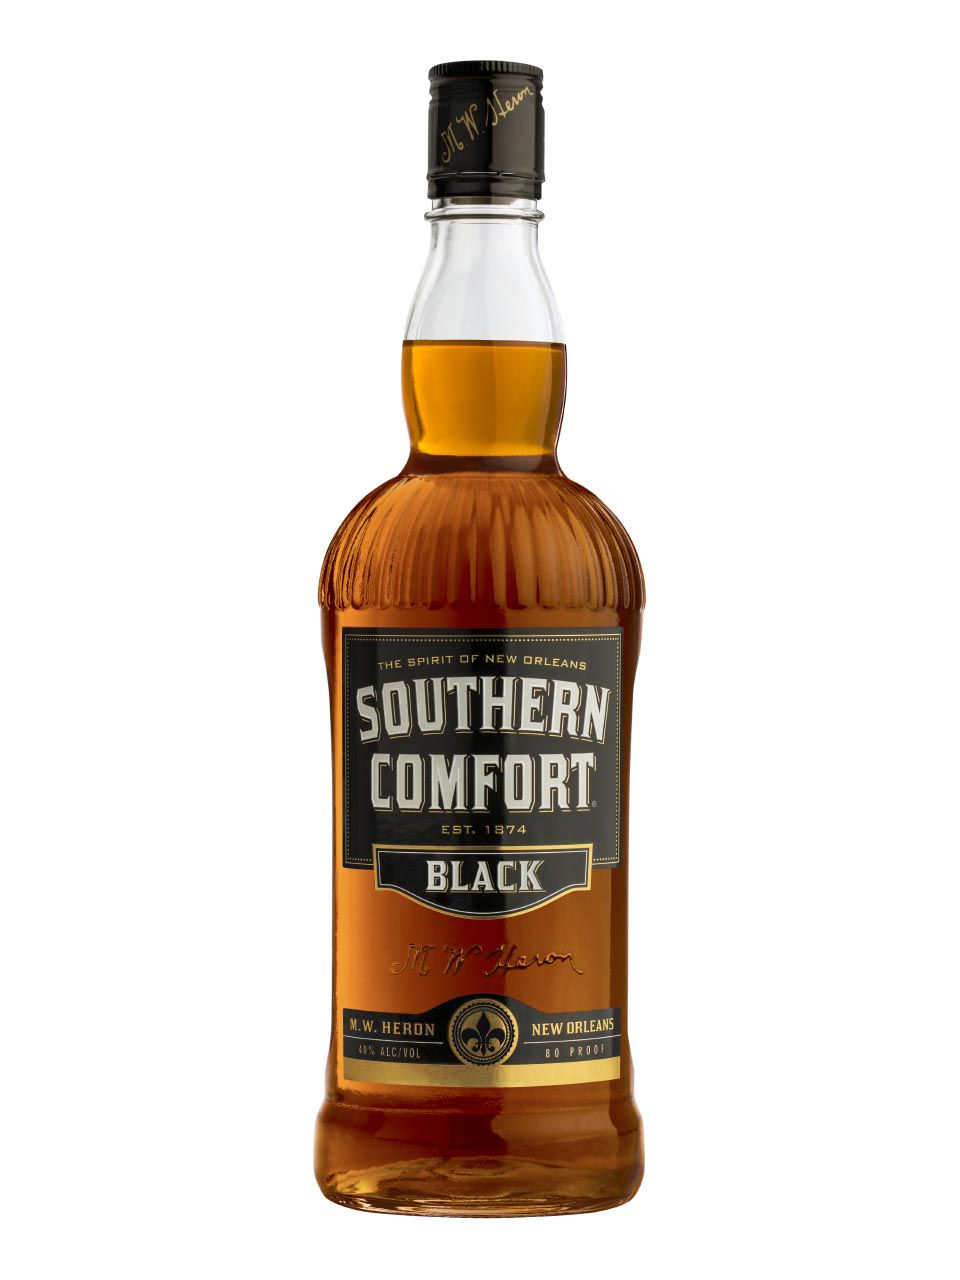 Southern Comfort - New Orleans Original (1L)